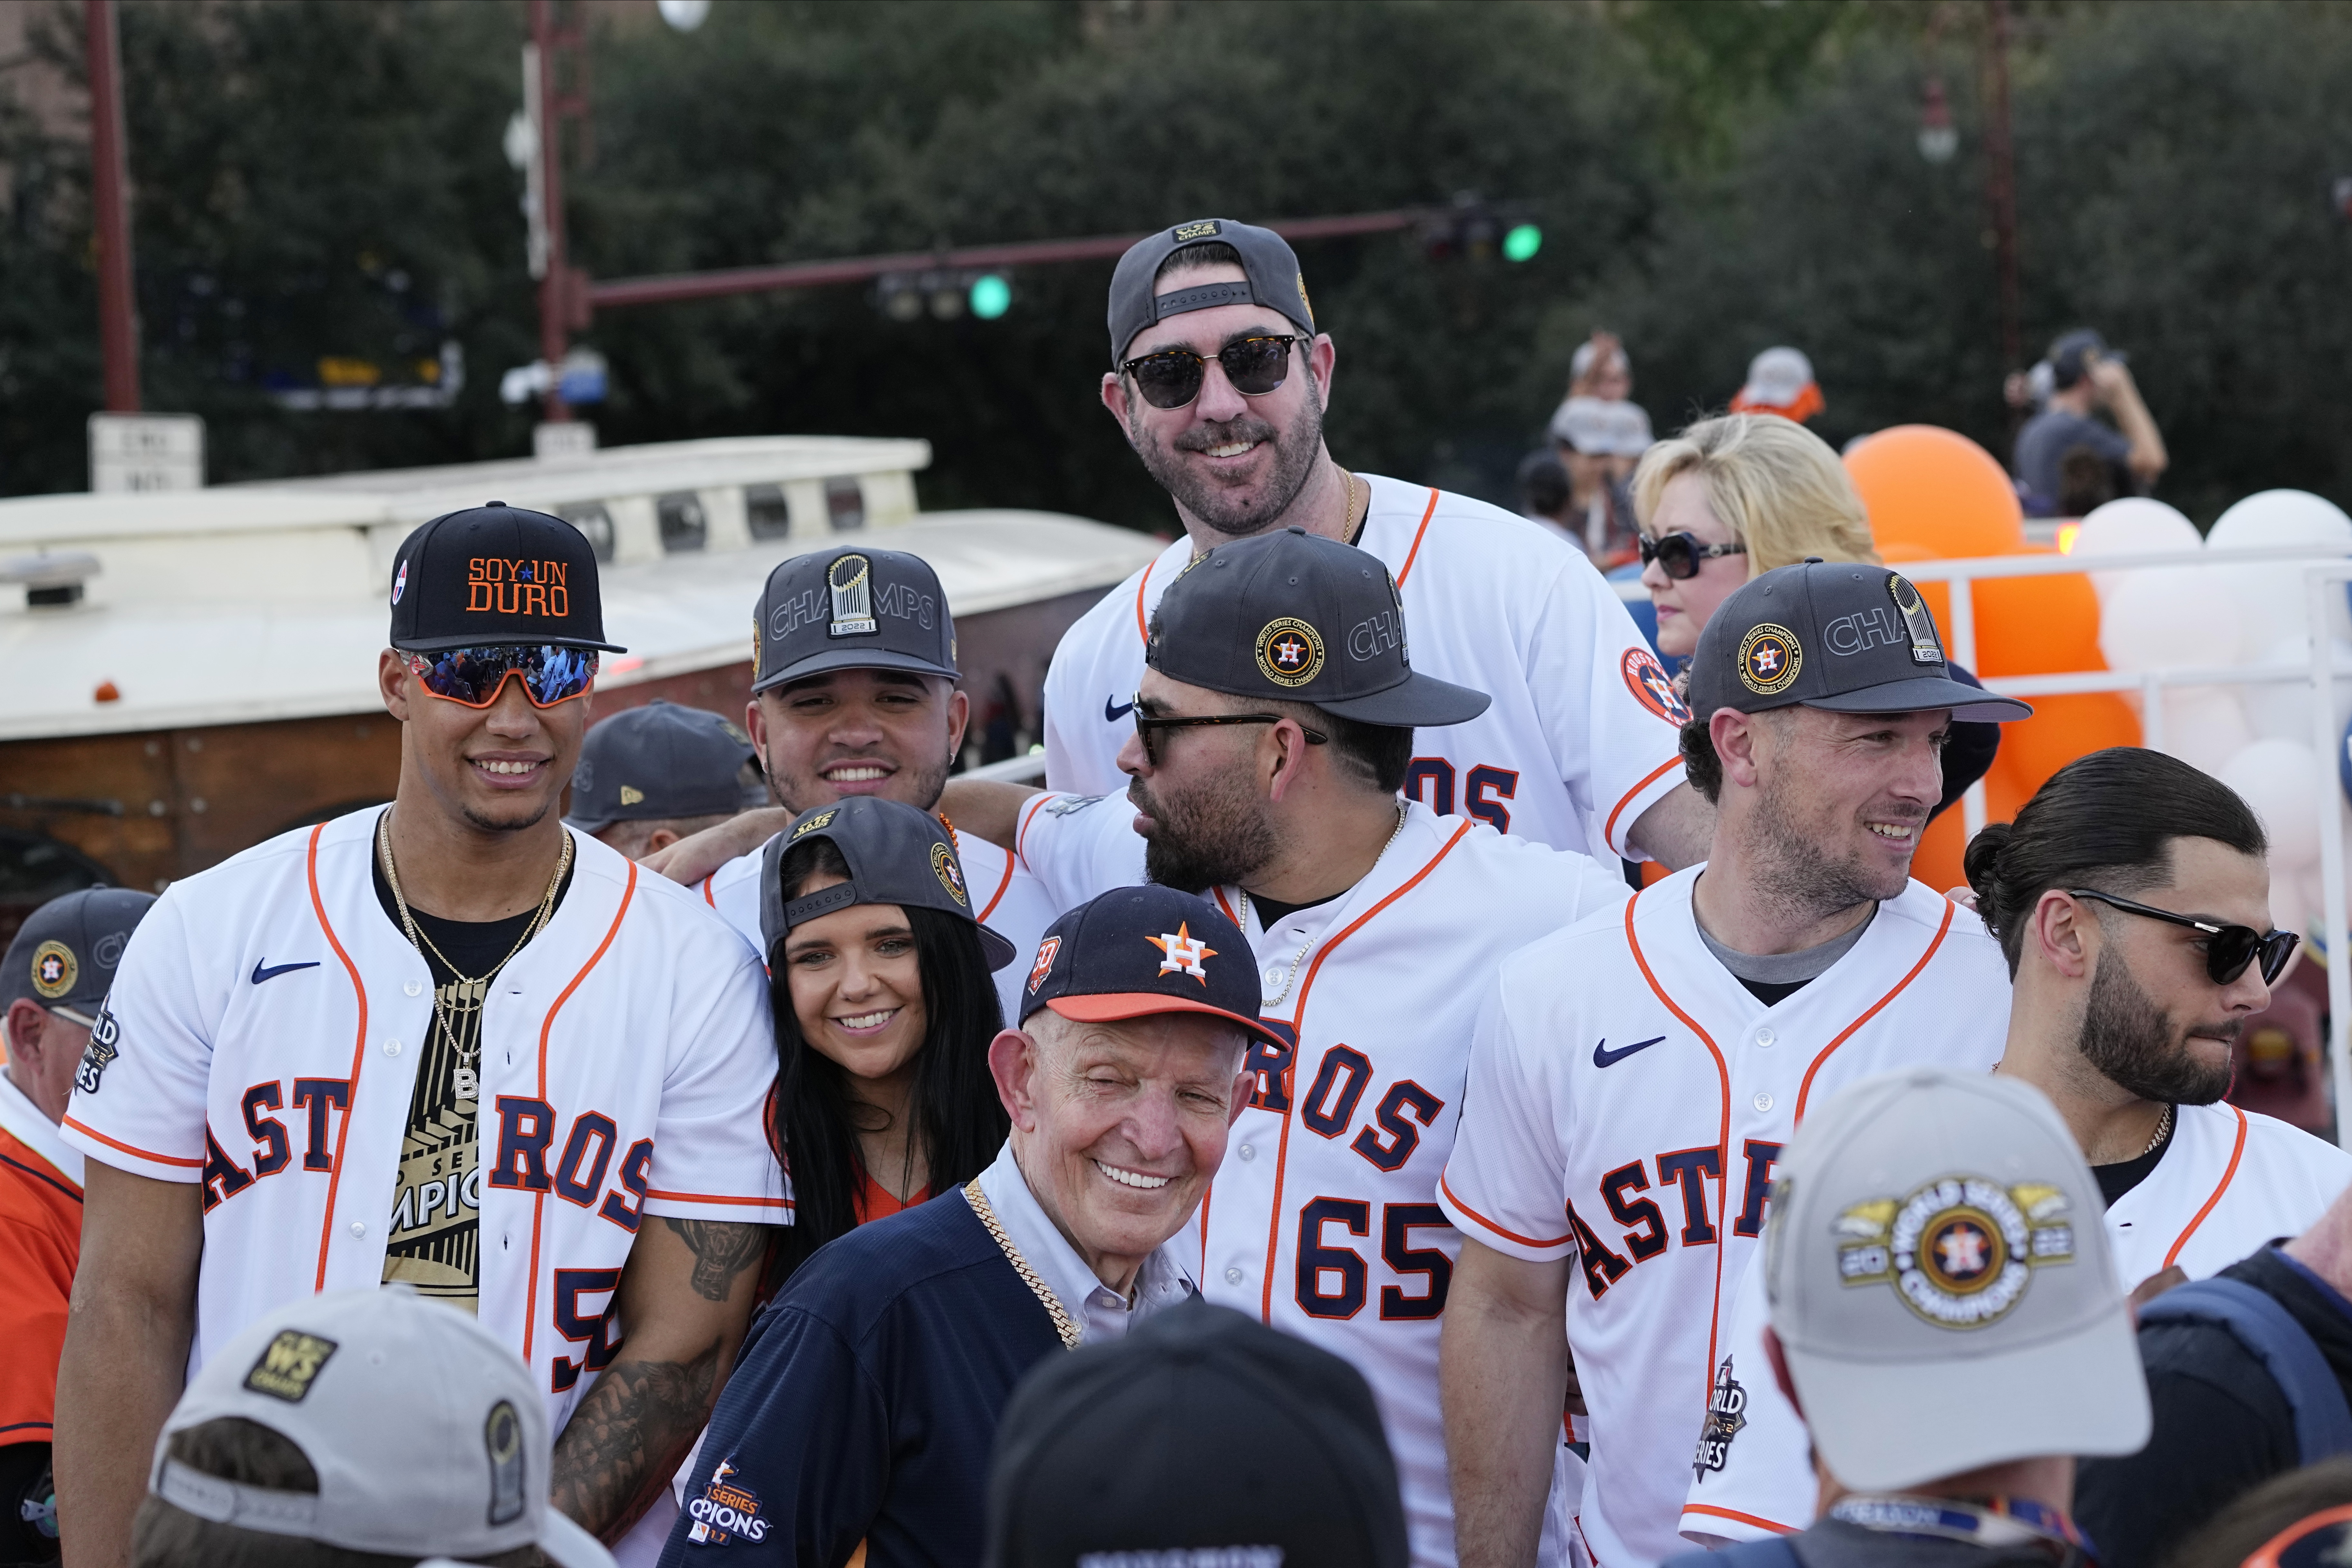 Houston Astros on X: Dress like a winner! The #Astros Union